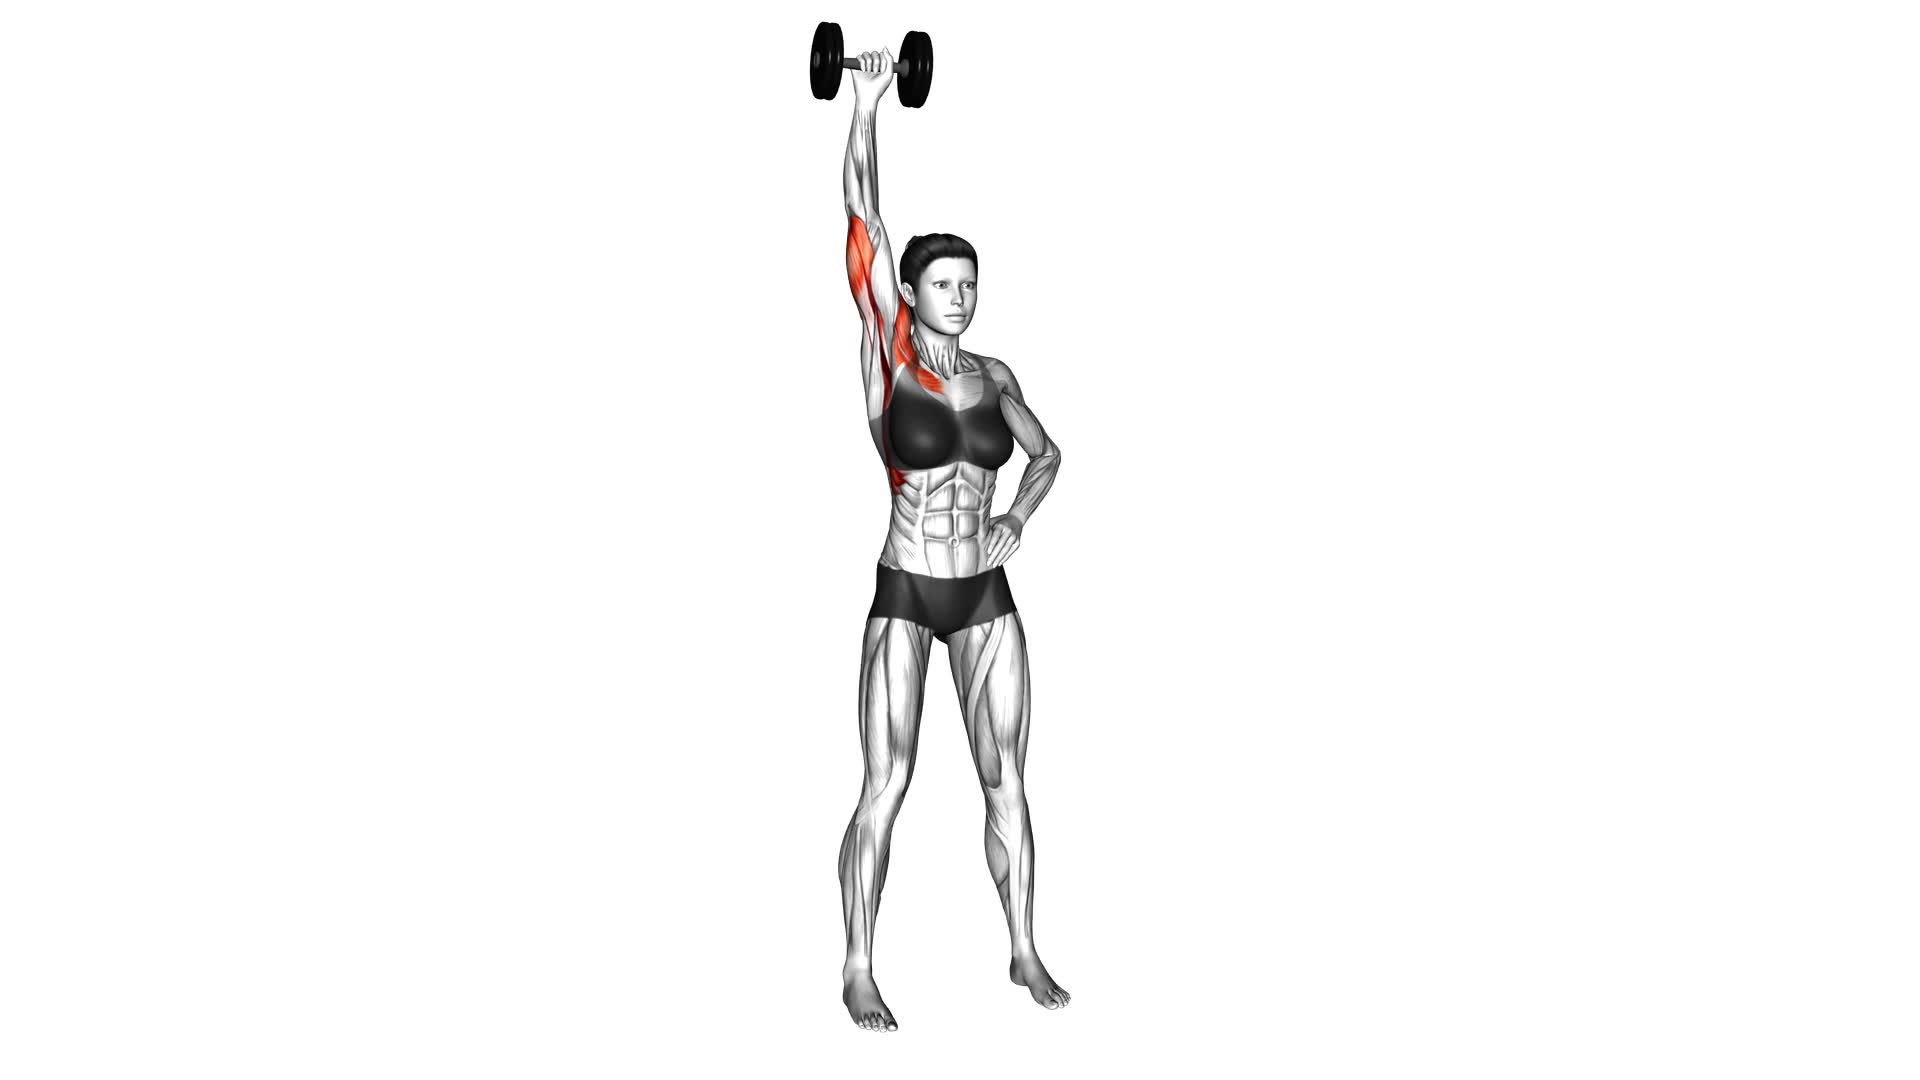 Dumbbell One Arm Shoulder Press (version 2) (female) - Video Exercise Guide & Tips